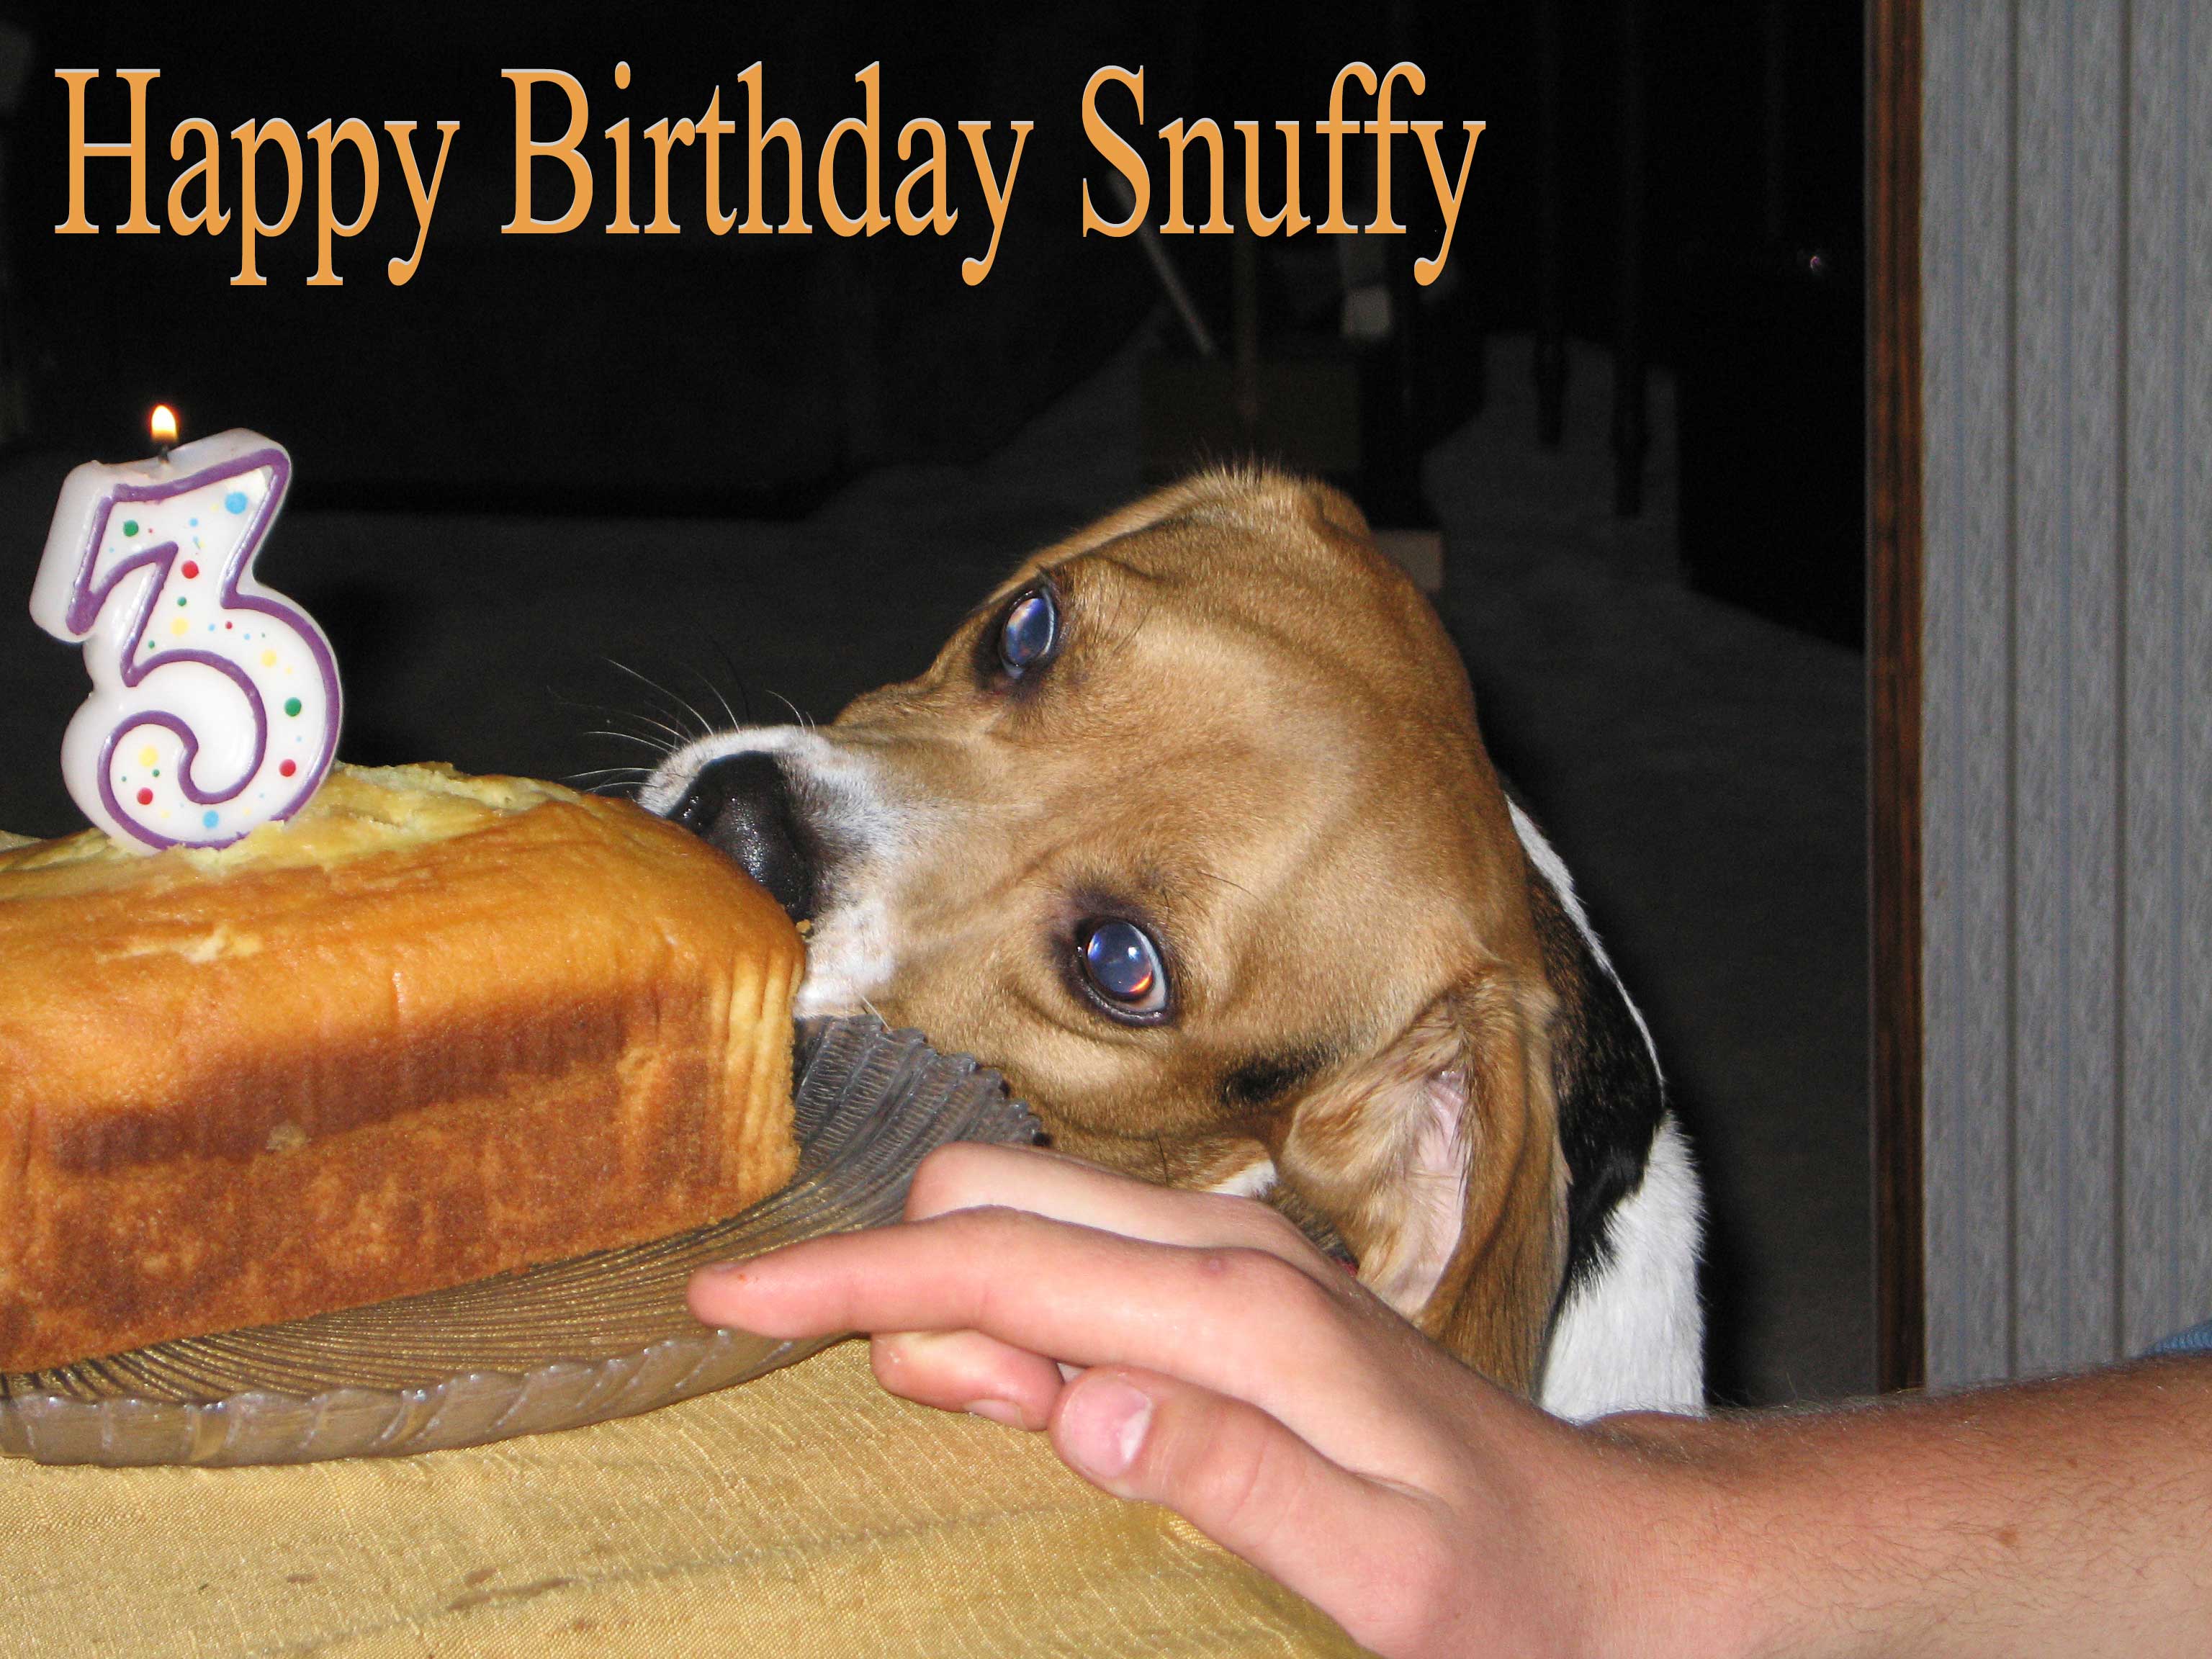 Snuffy's Birthday